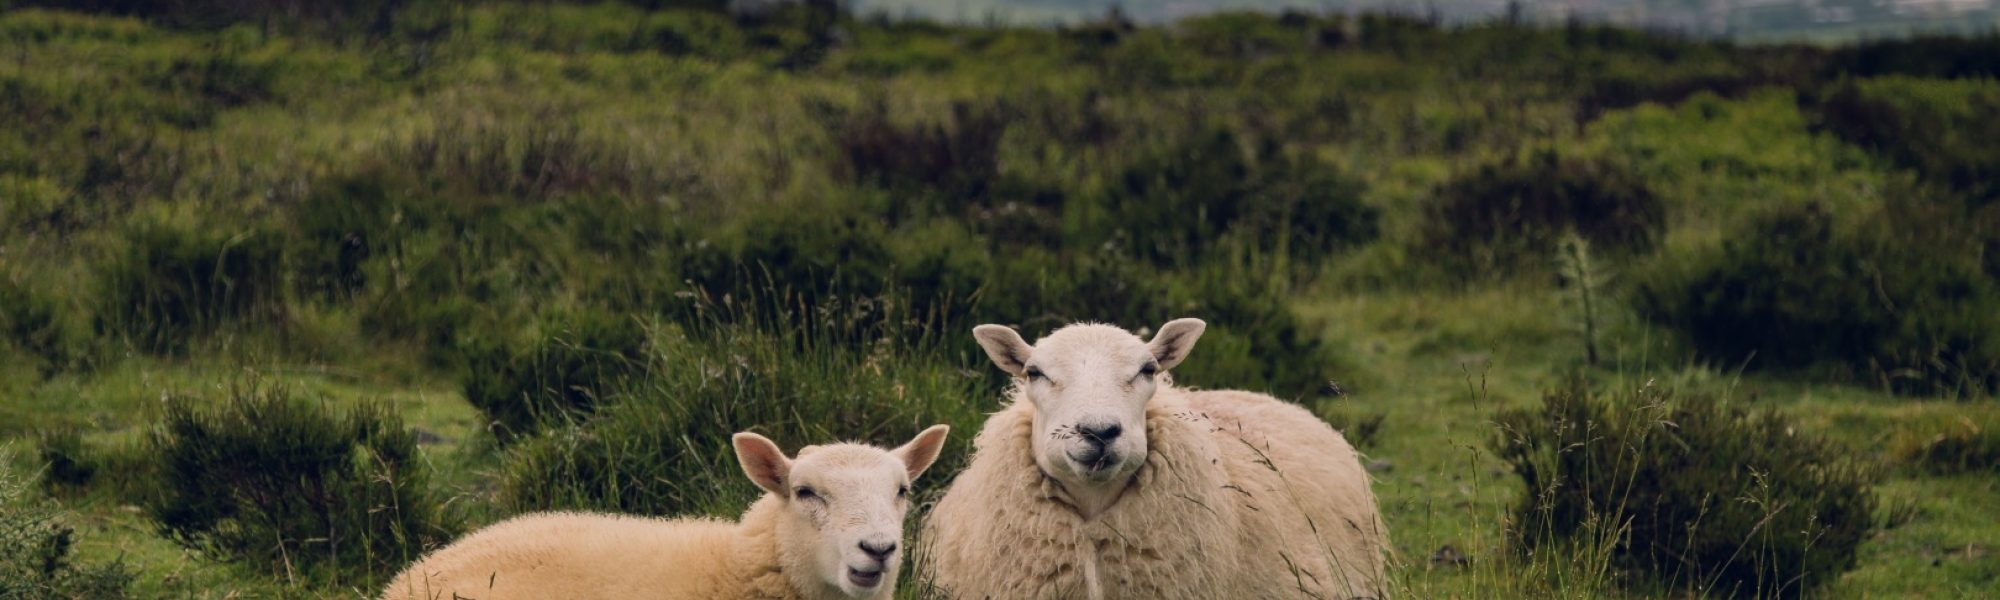 Two sheep in foggy field